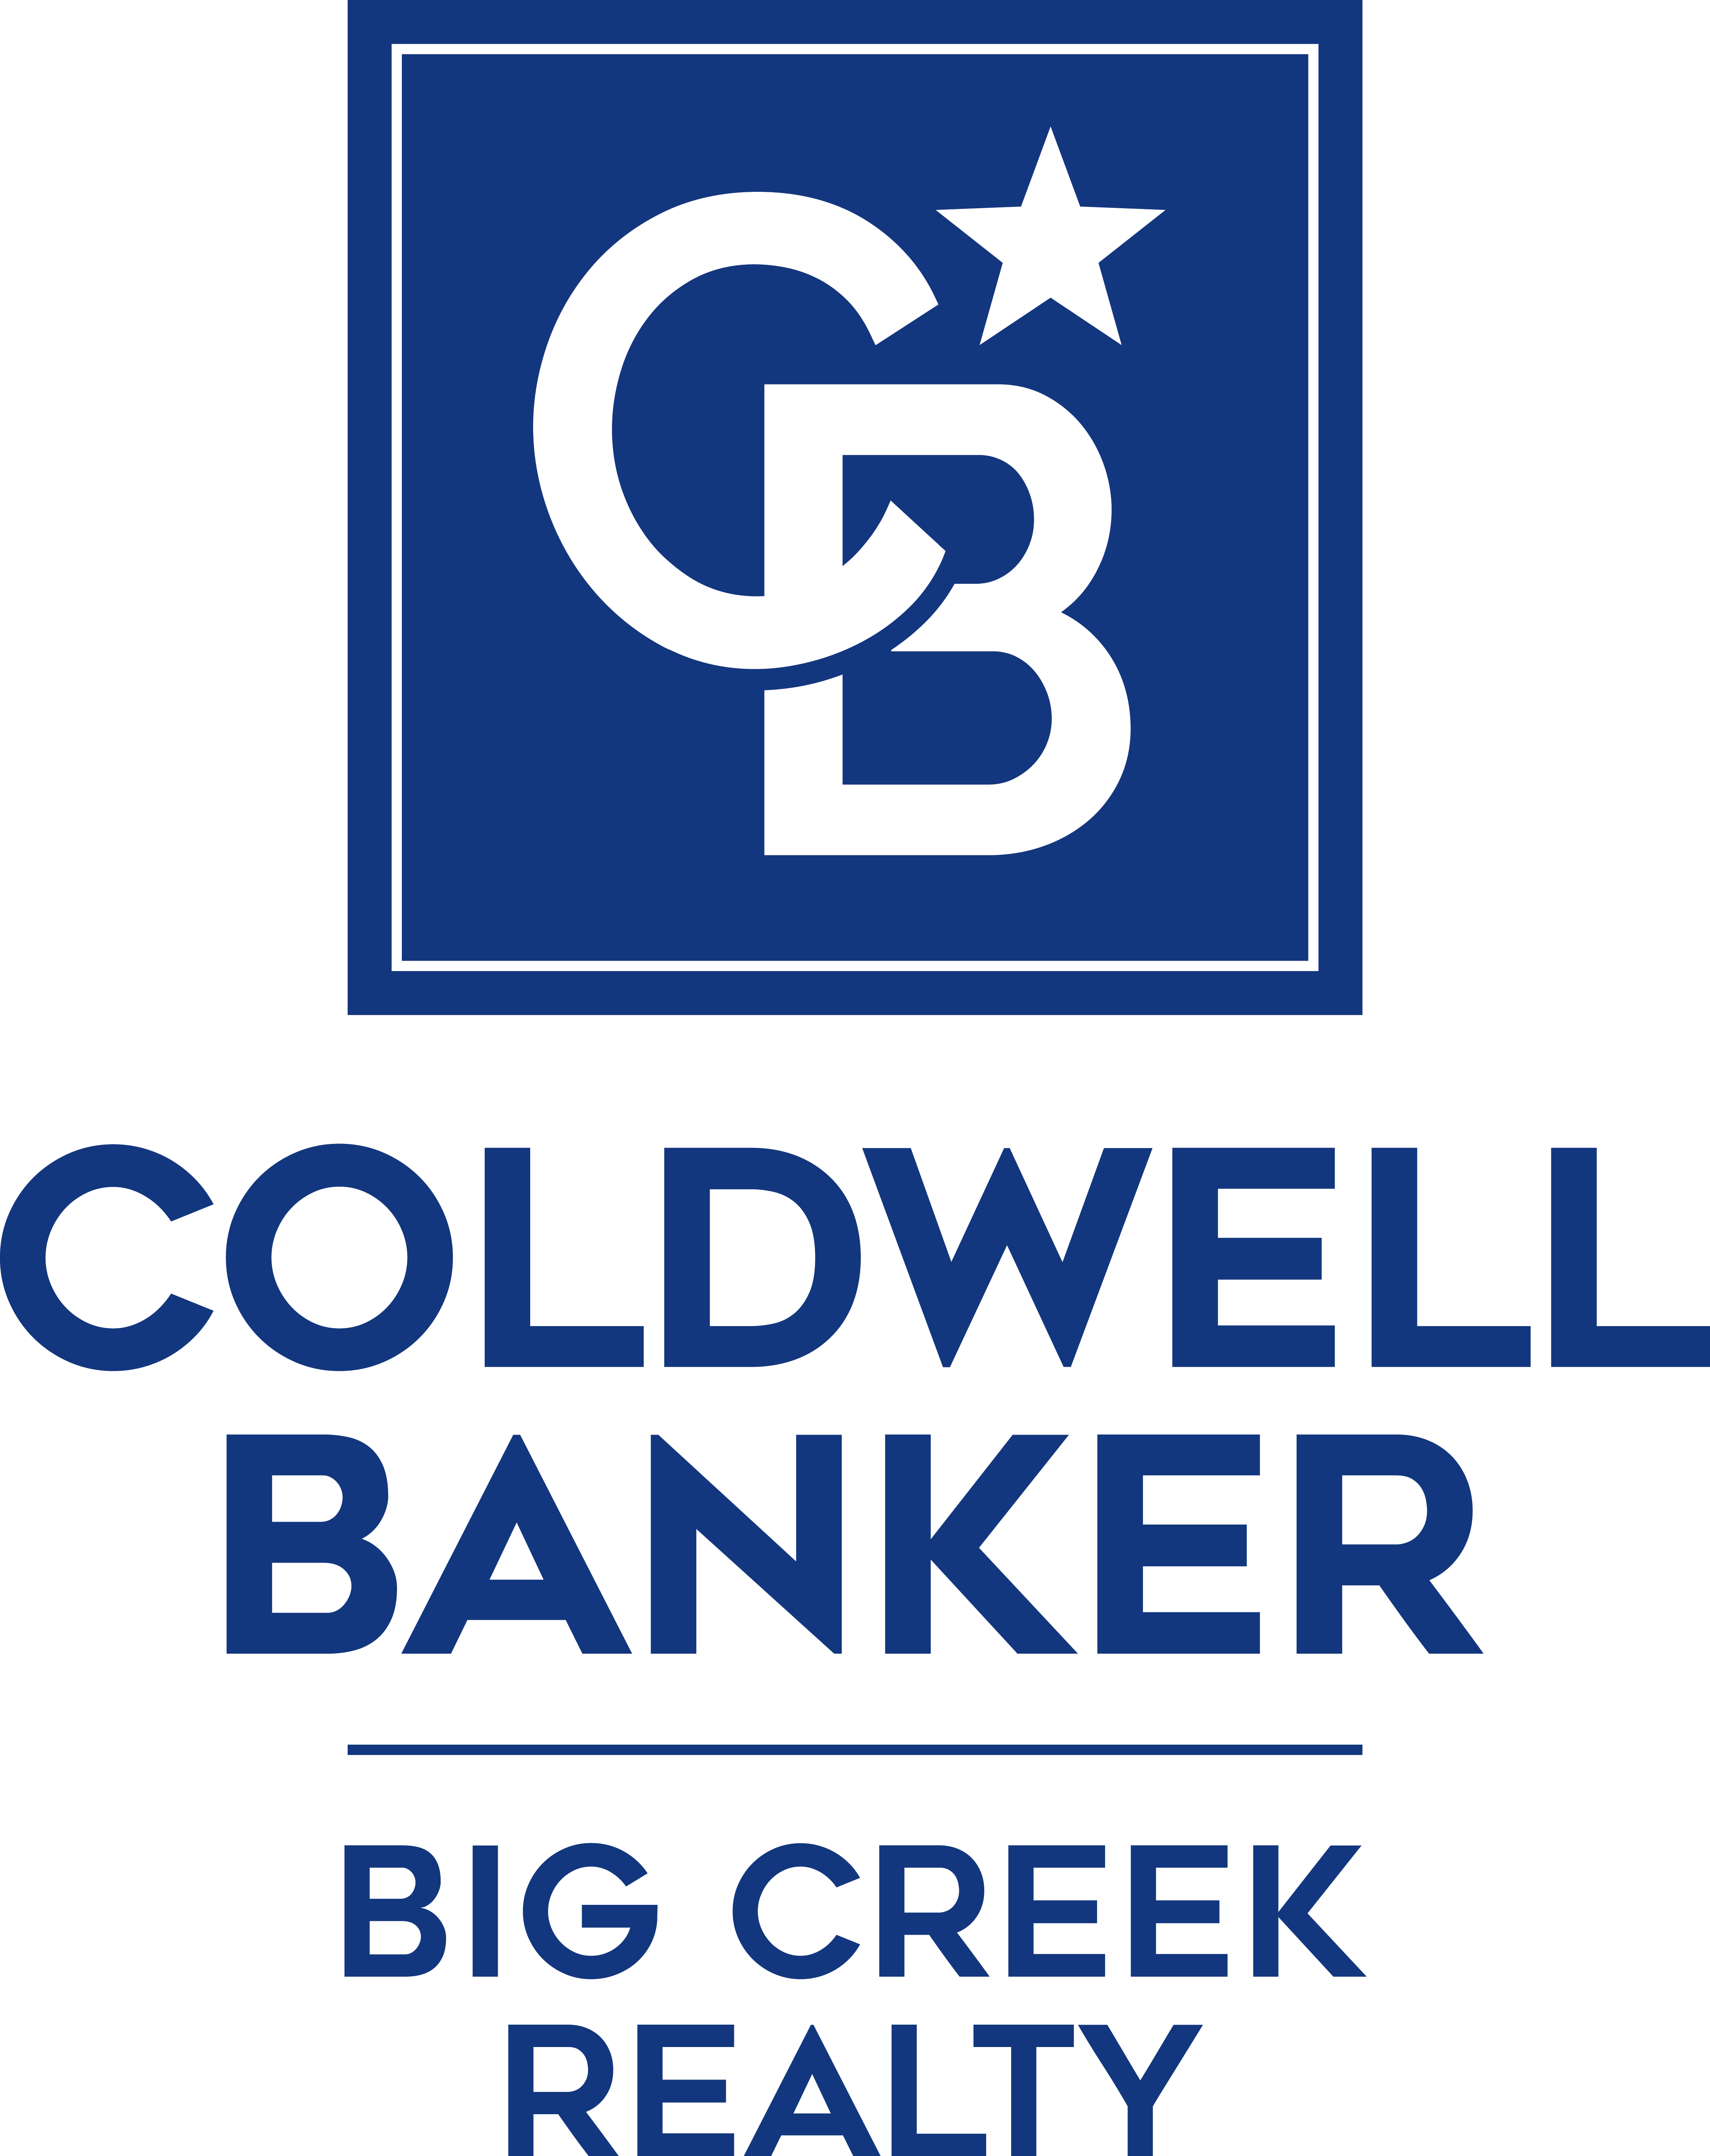 Big Creek Realty - Coldwell Banker